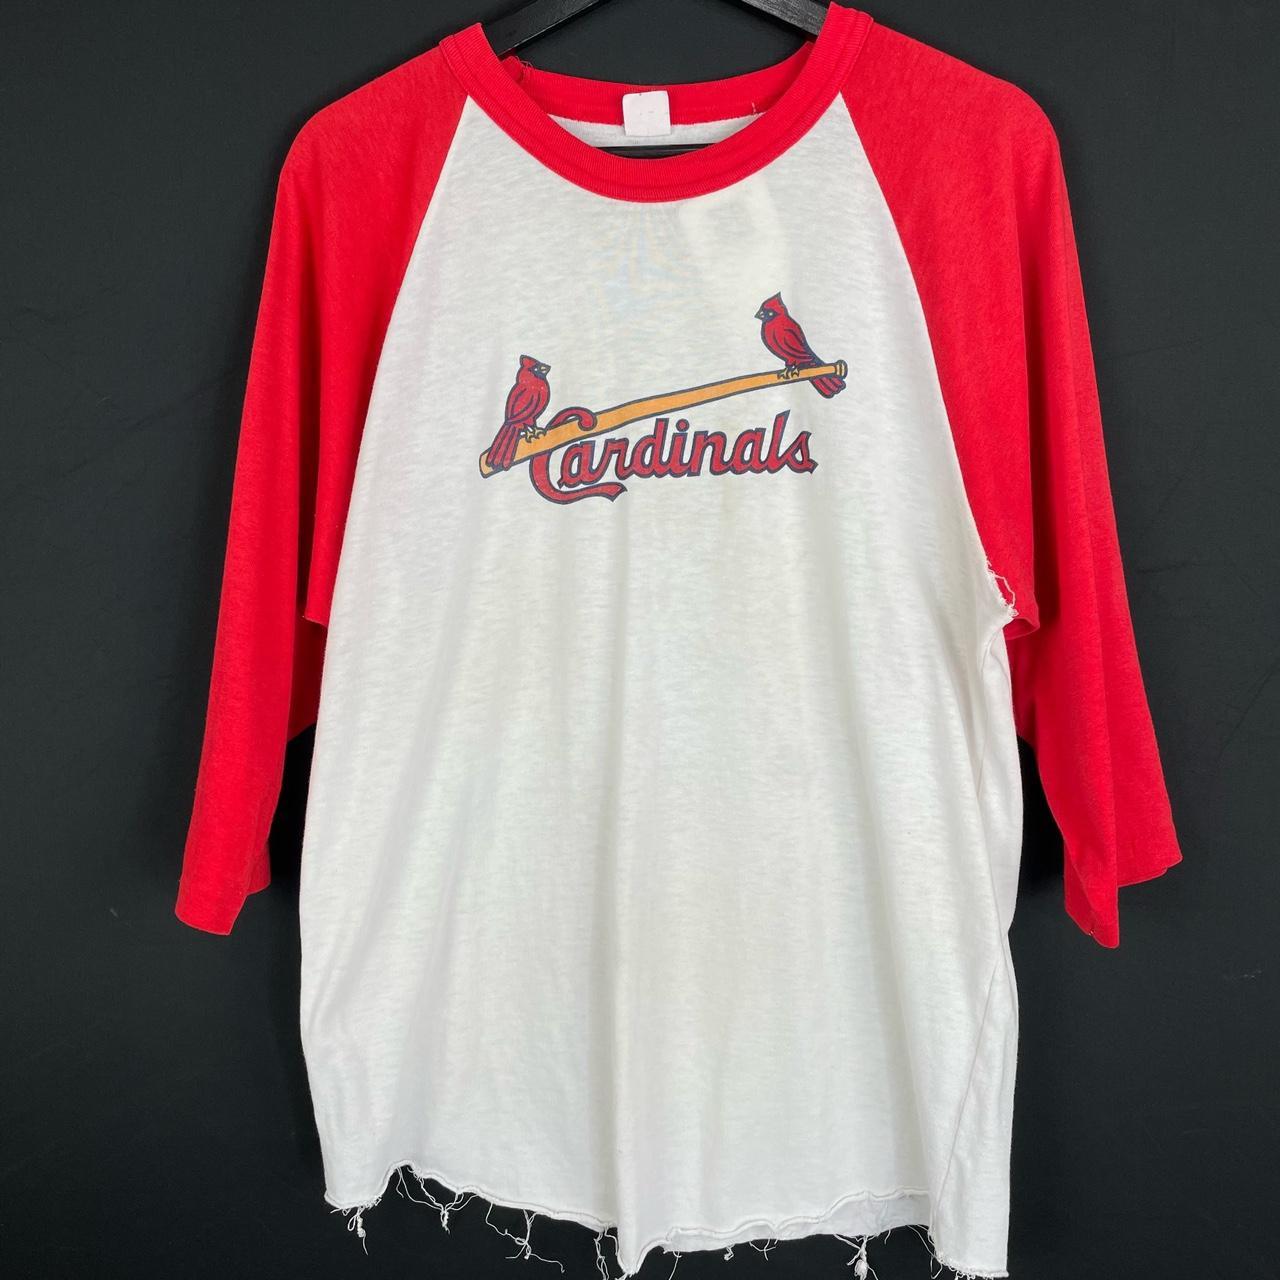 Vintage 80s MLB St Louis Cardinals Baseball Crewneck Size 